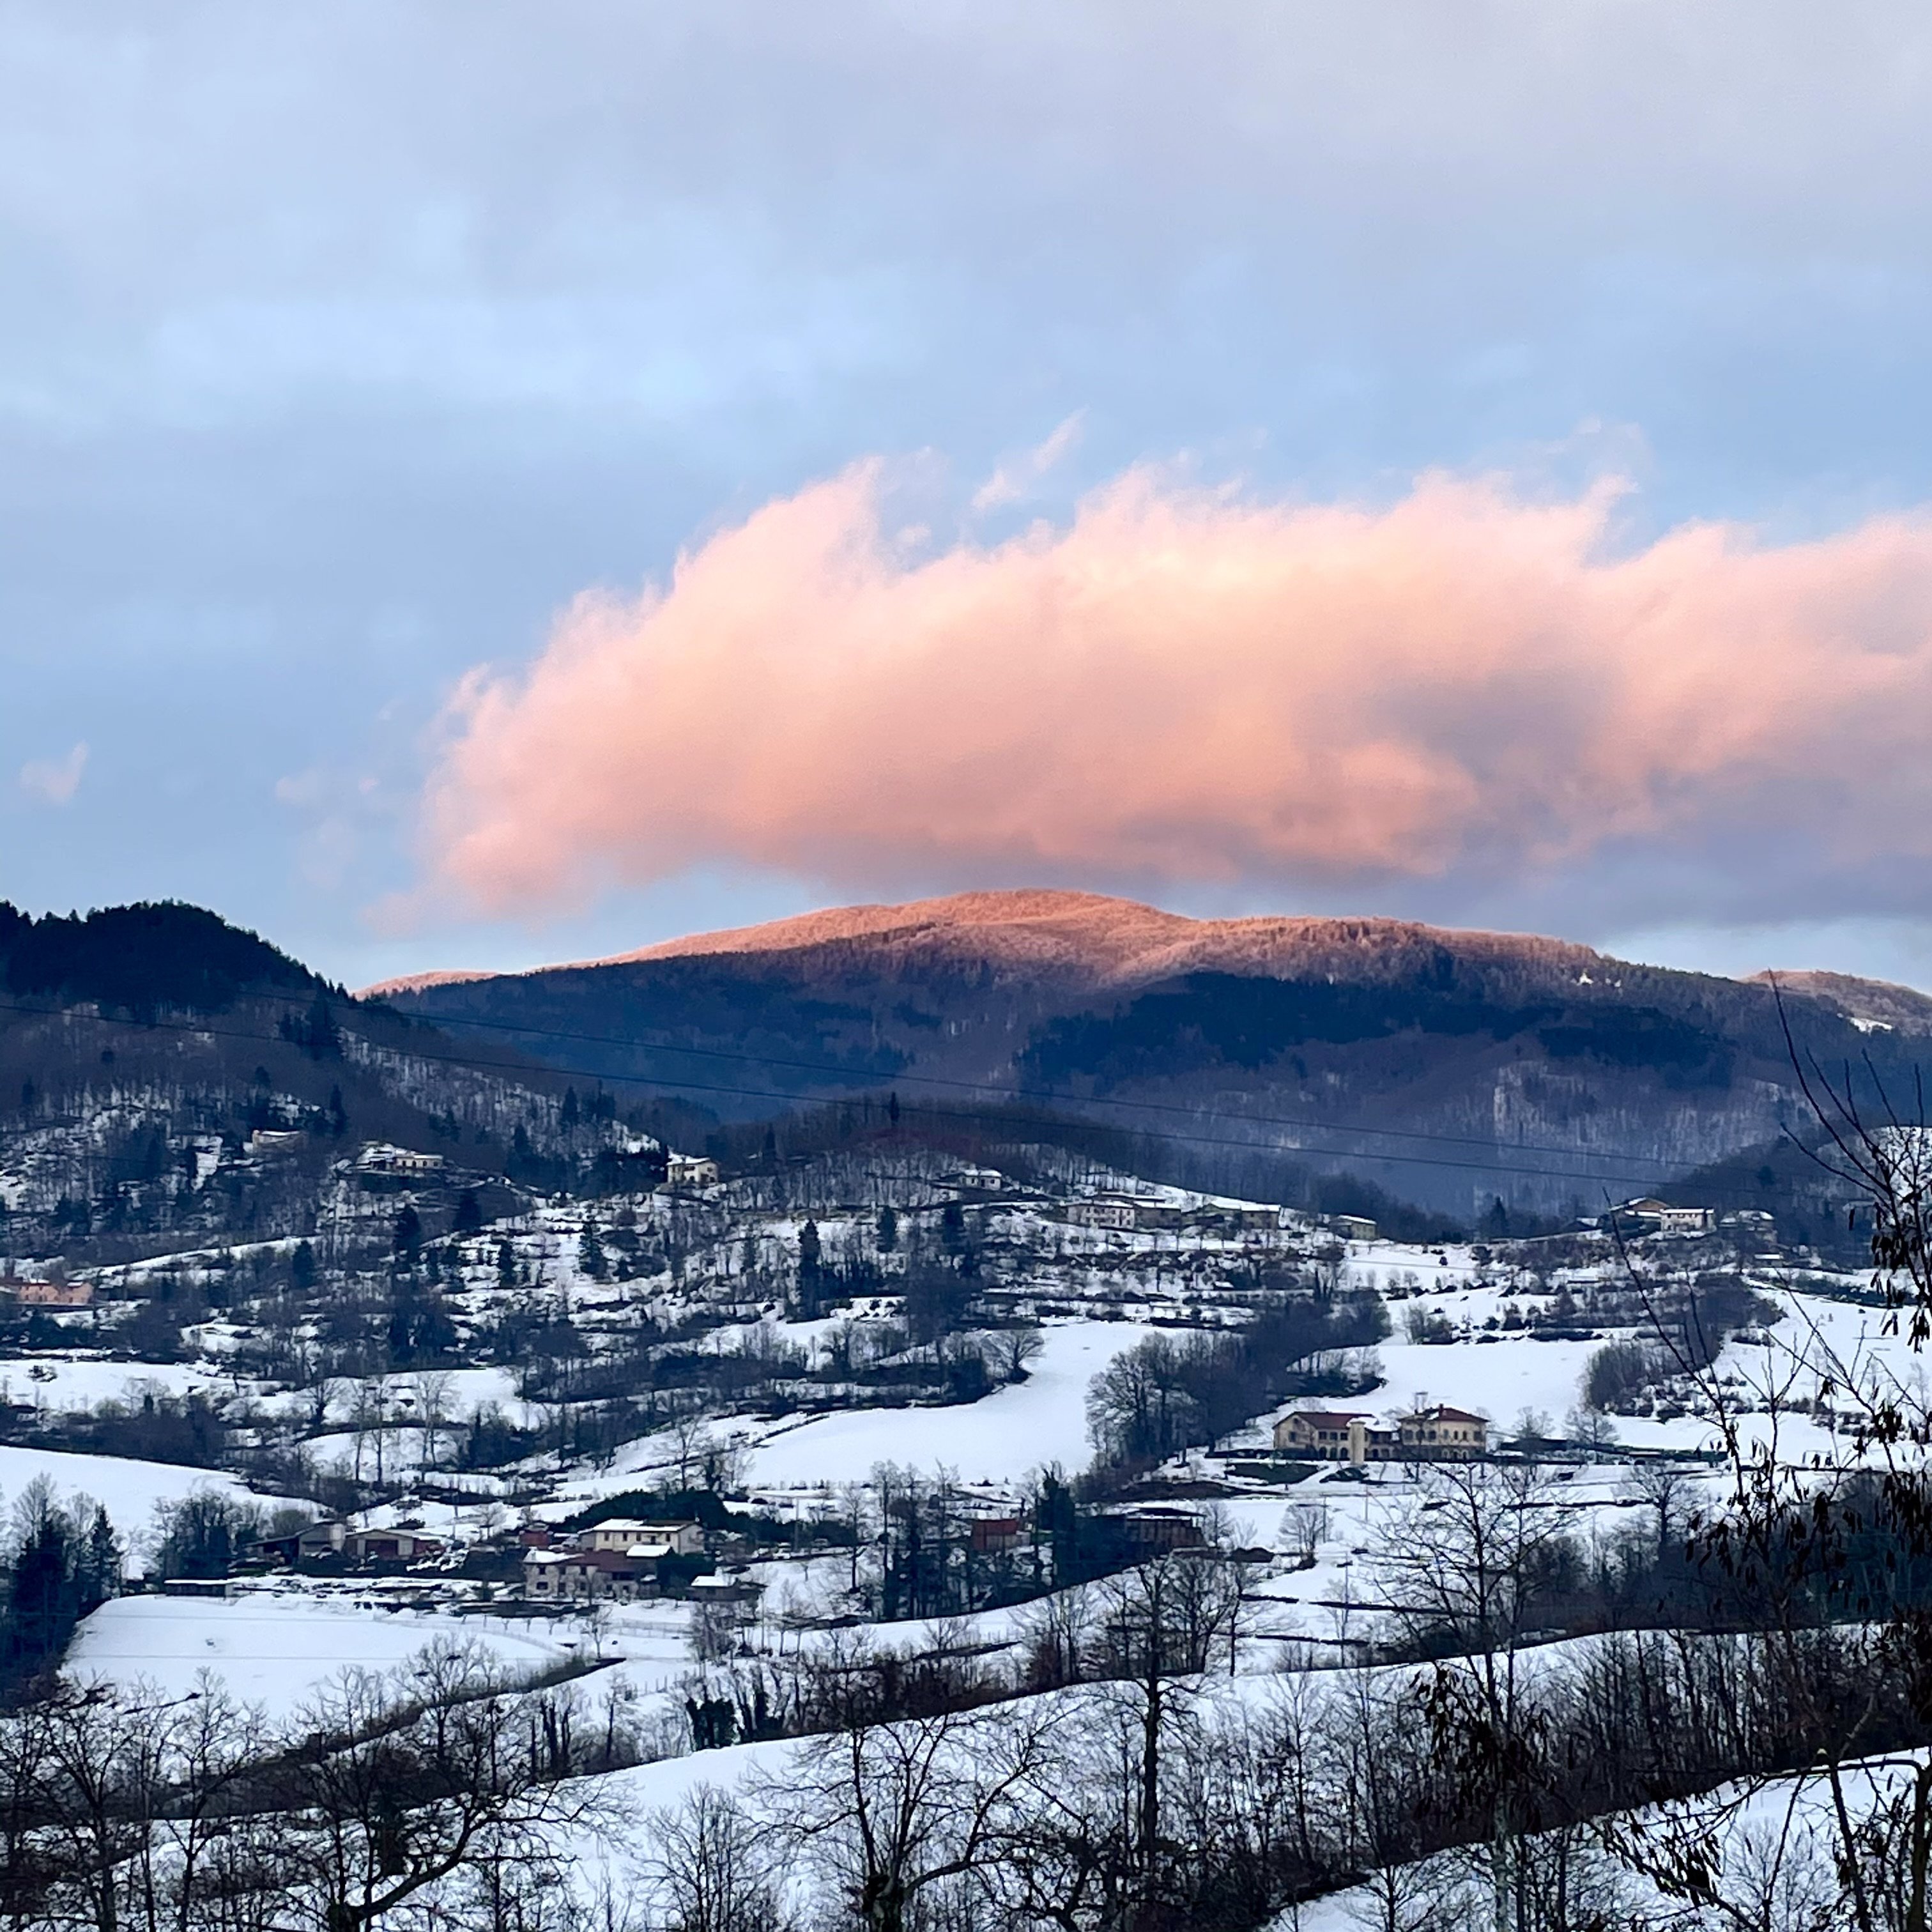 📷 17/01/2021 📷    Snow    Piteglio, Tuscany, Italy